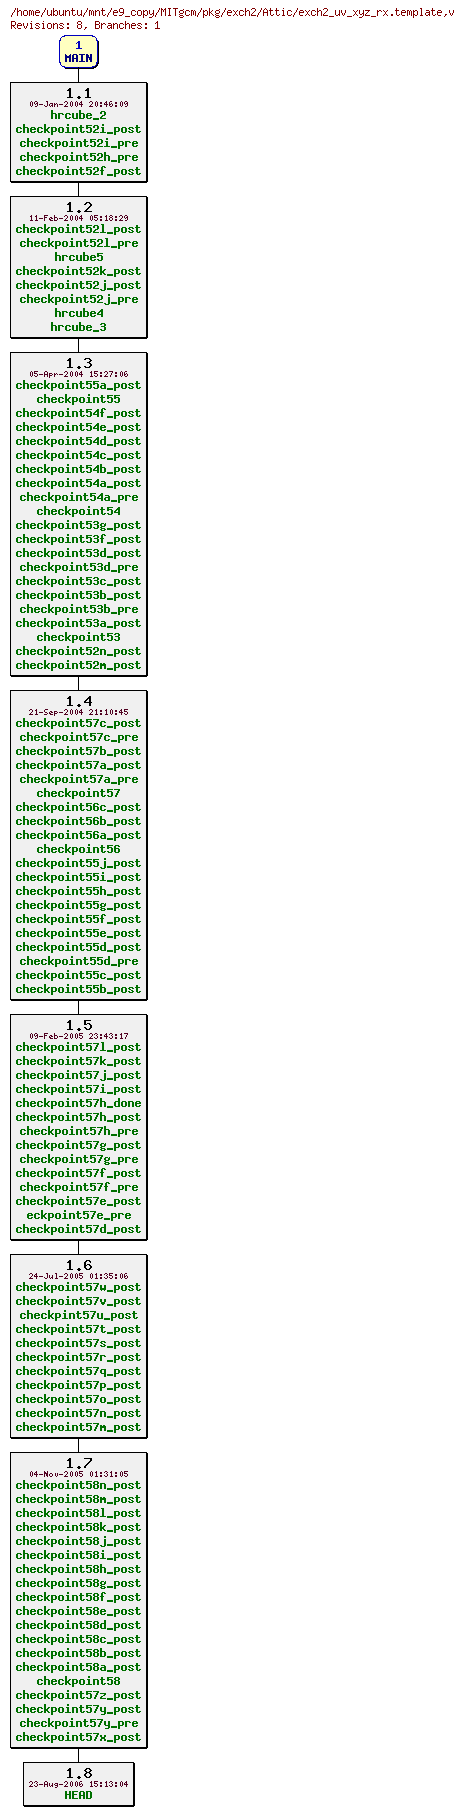 Revisions of MITgcm/pkg/exch2/exch2_uv_xyz_rx.template